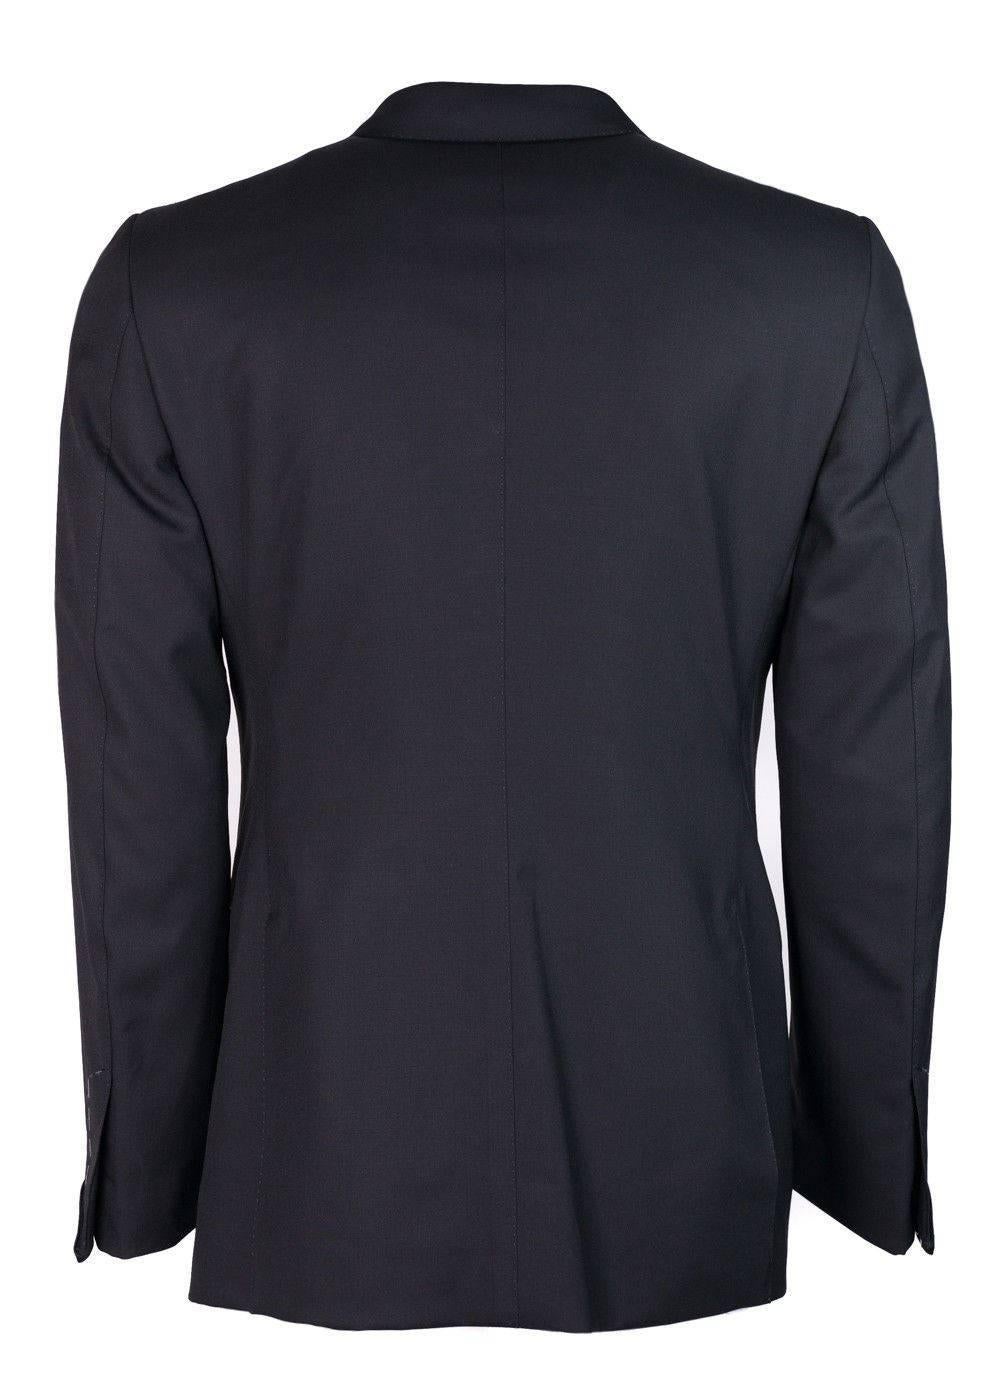 Women's Tom Ford Men's Black Wool Blend Shelton Two Piece Suit For Sale